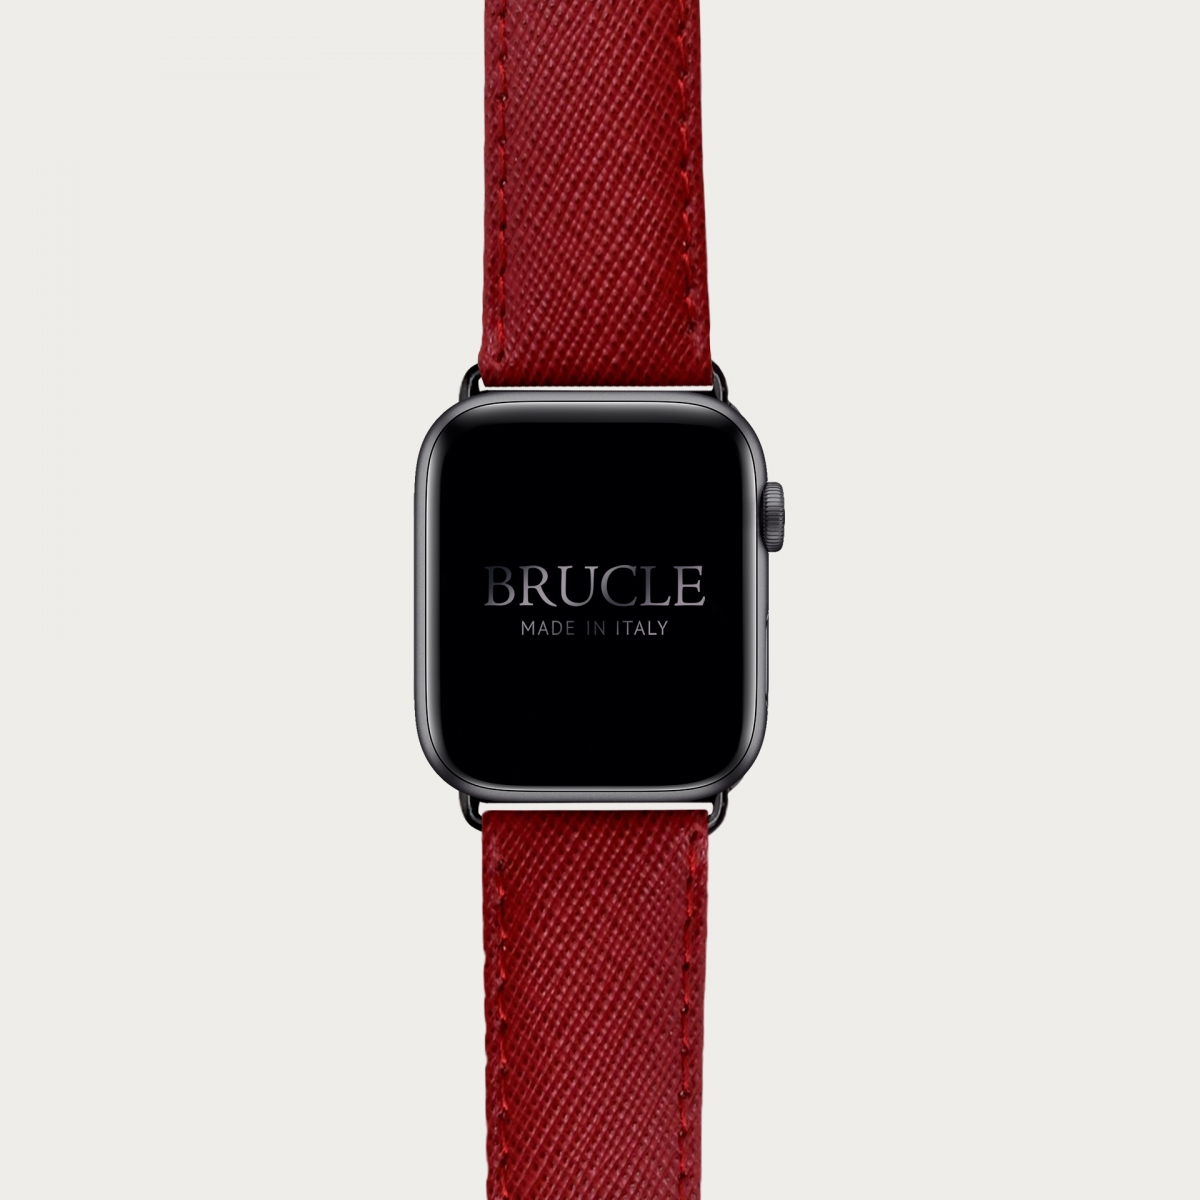 Armband kompatibel mit Apple Watch / Samsung Smartwatch, rot, leder mit Saffiano-print